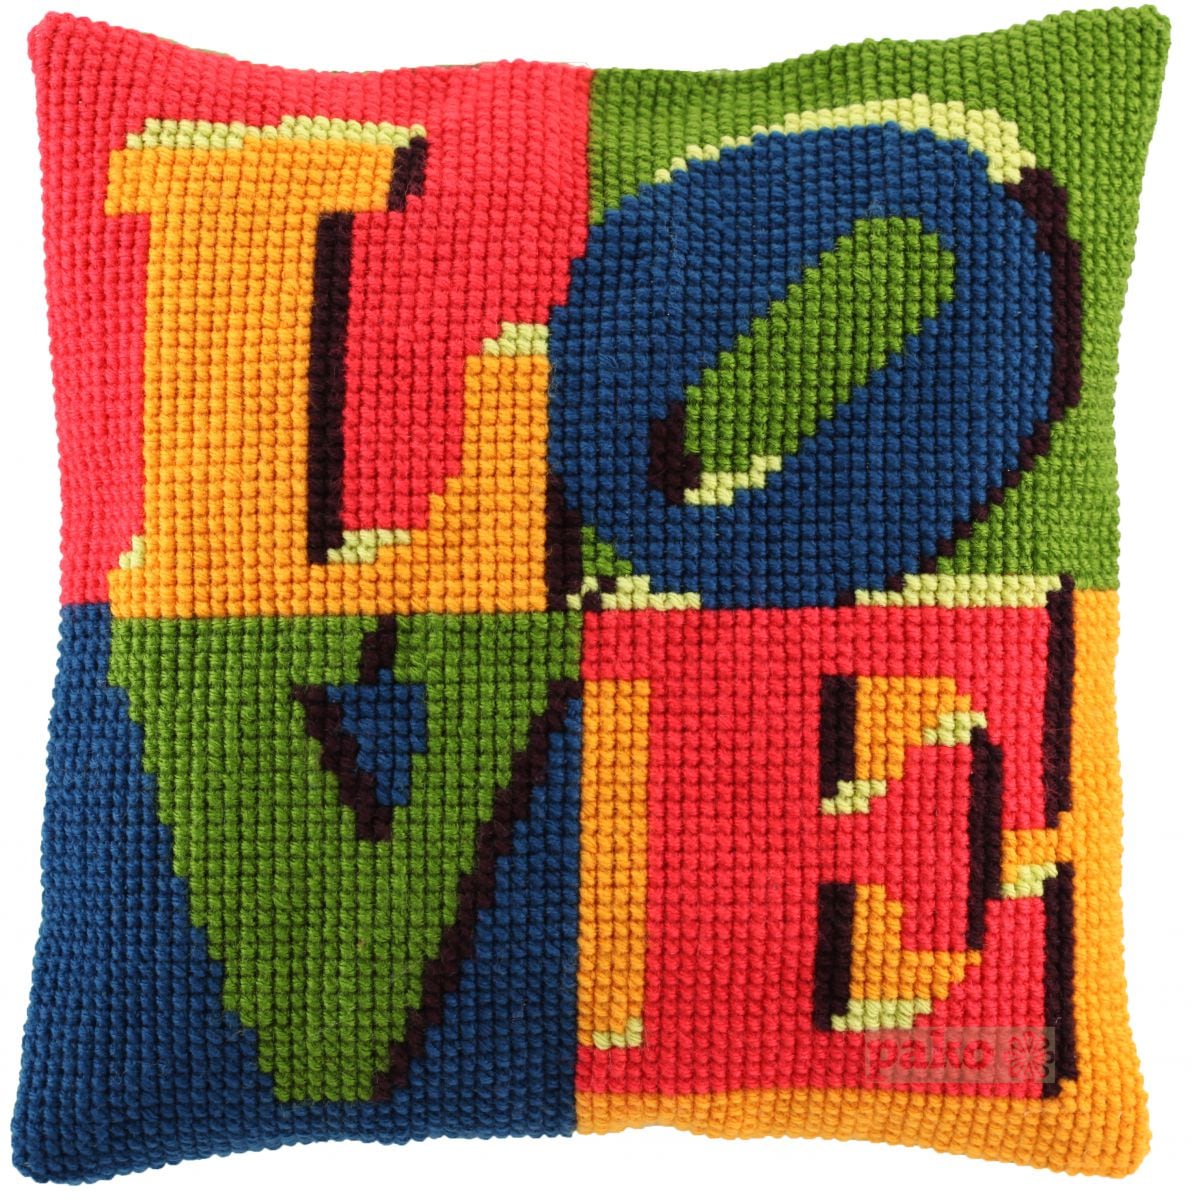 cross stitch cushion love printed